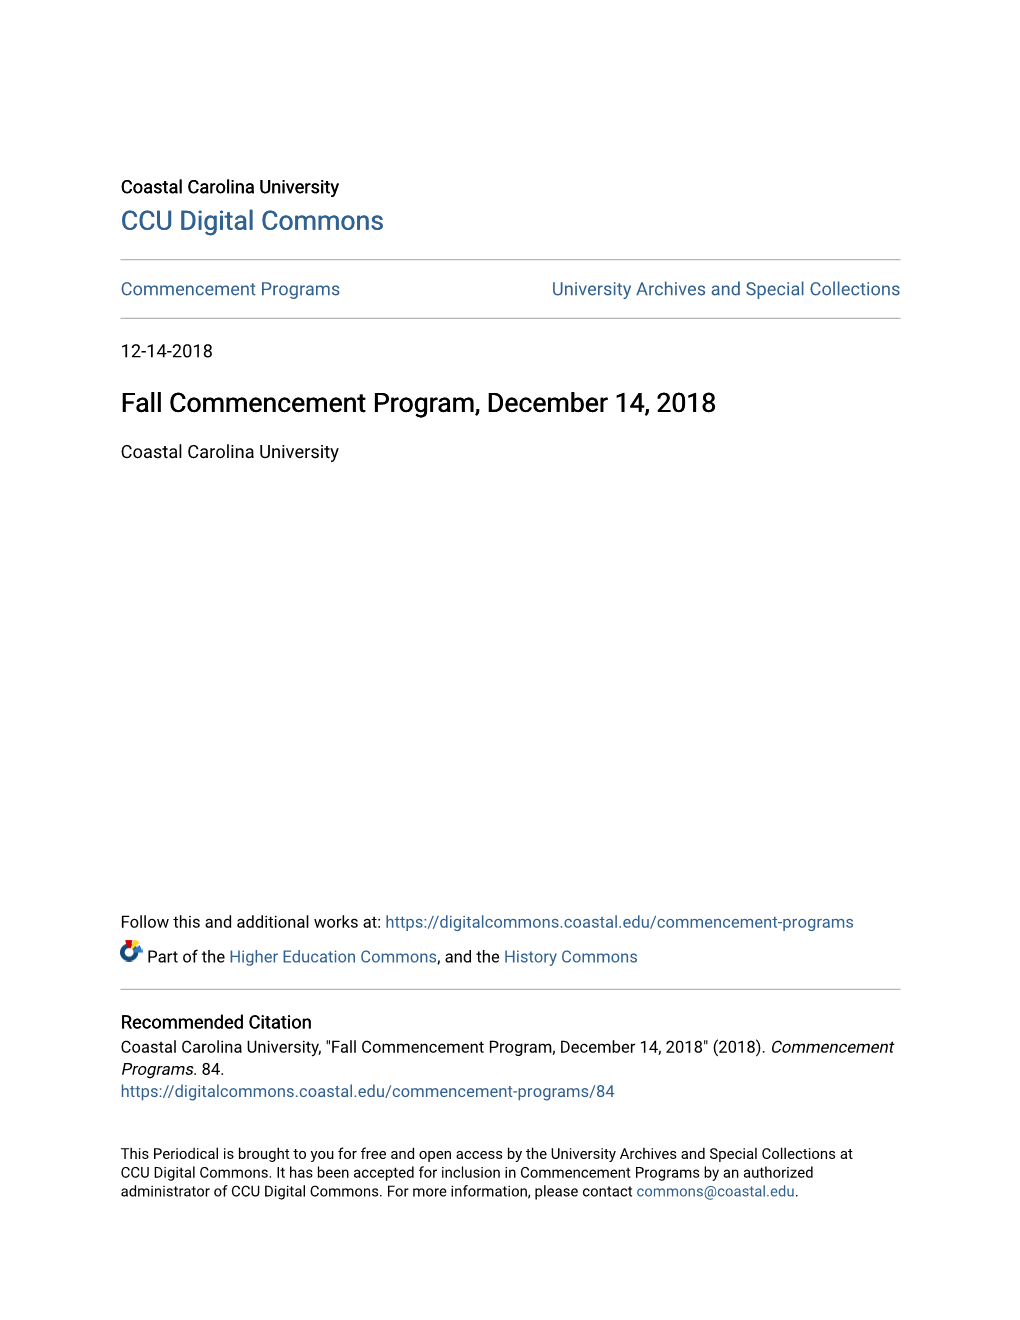 Fall Commencement Program, December 14, 2018